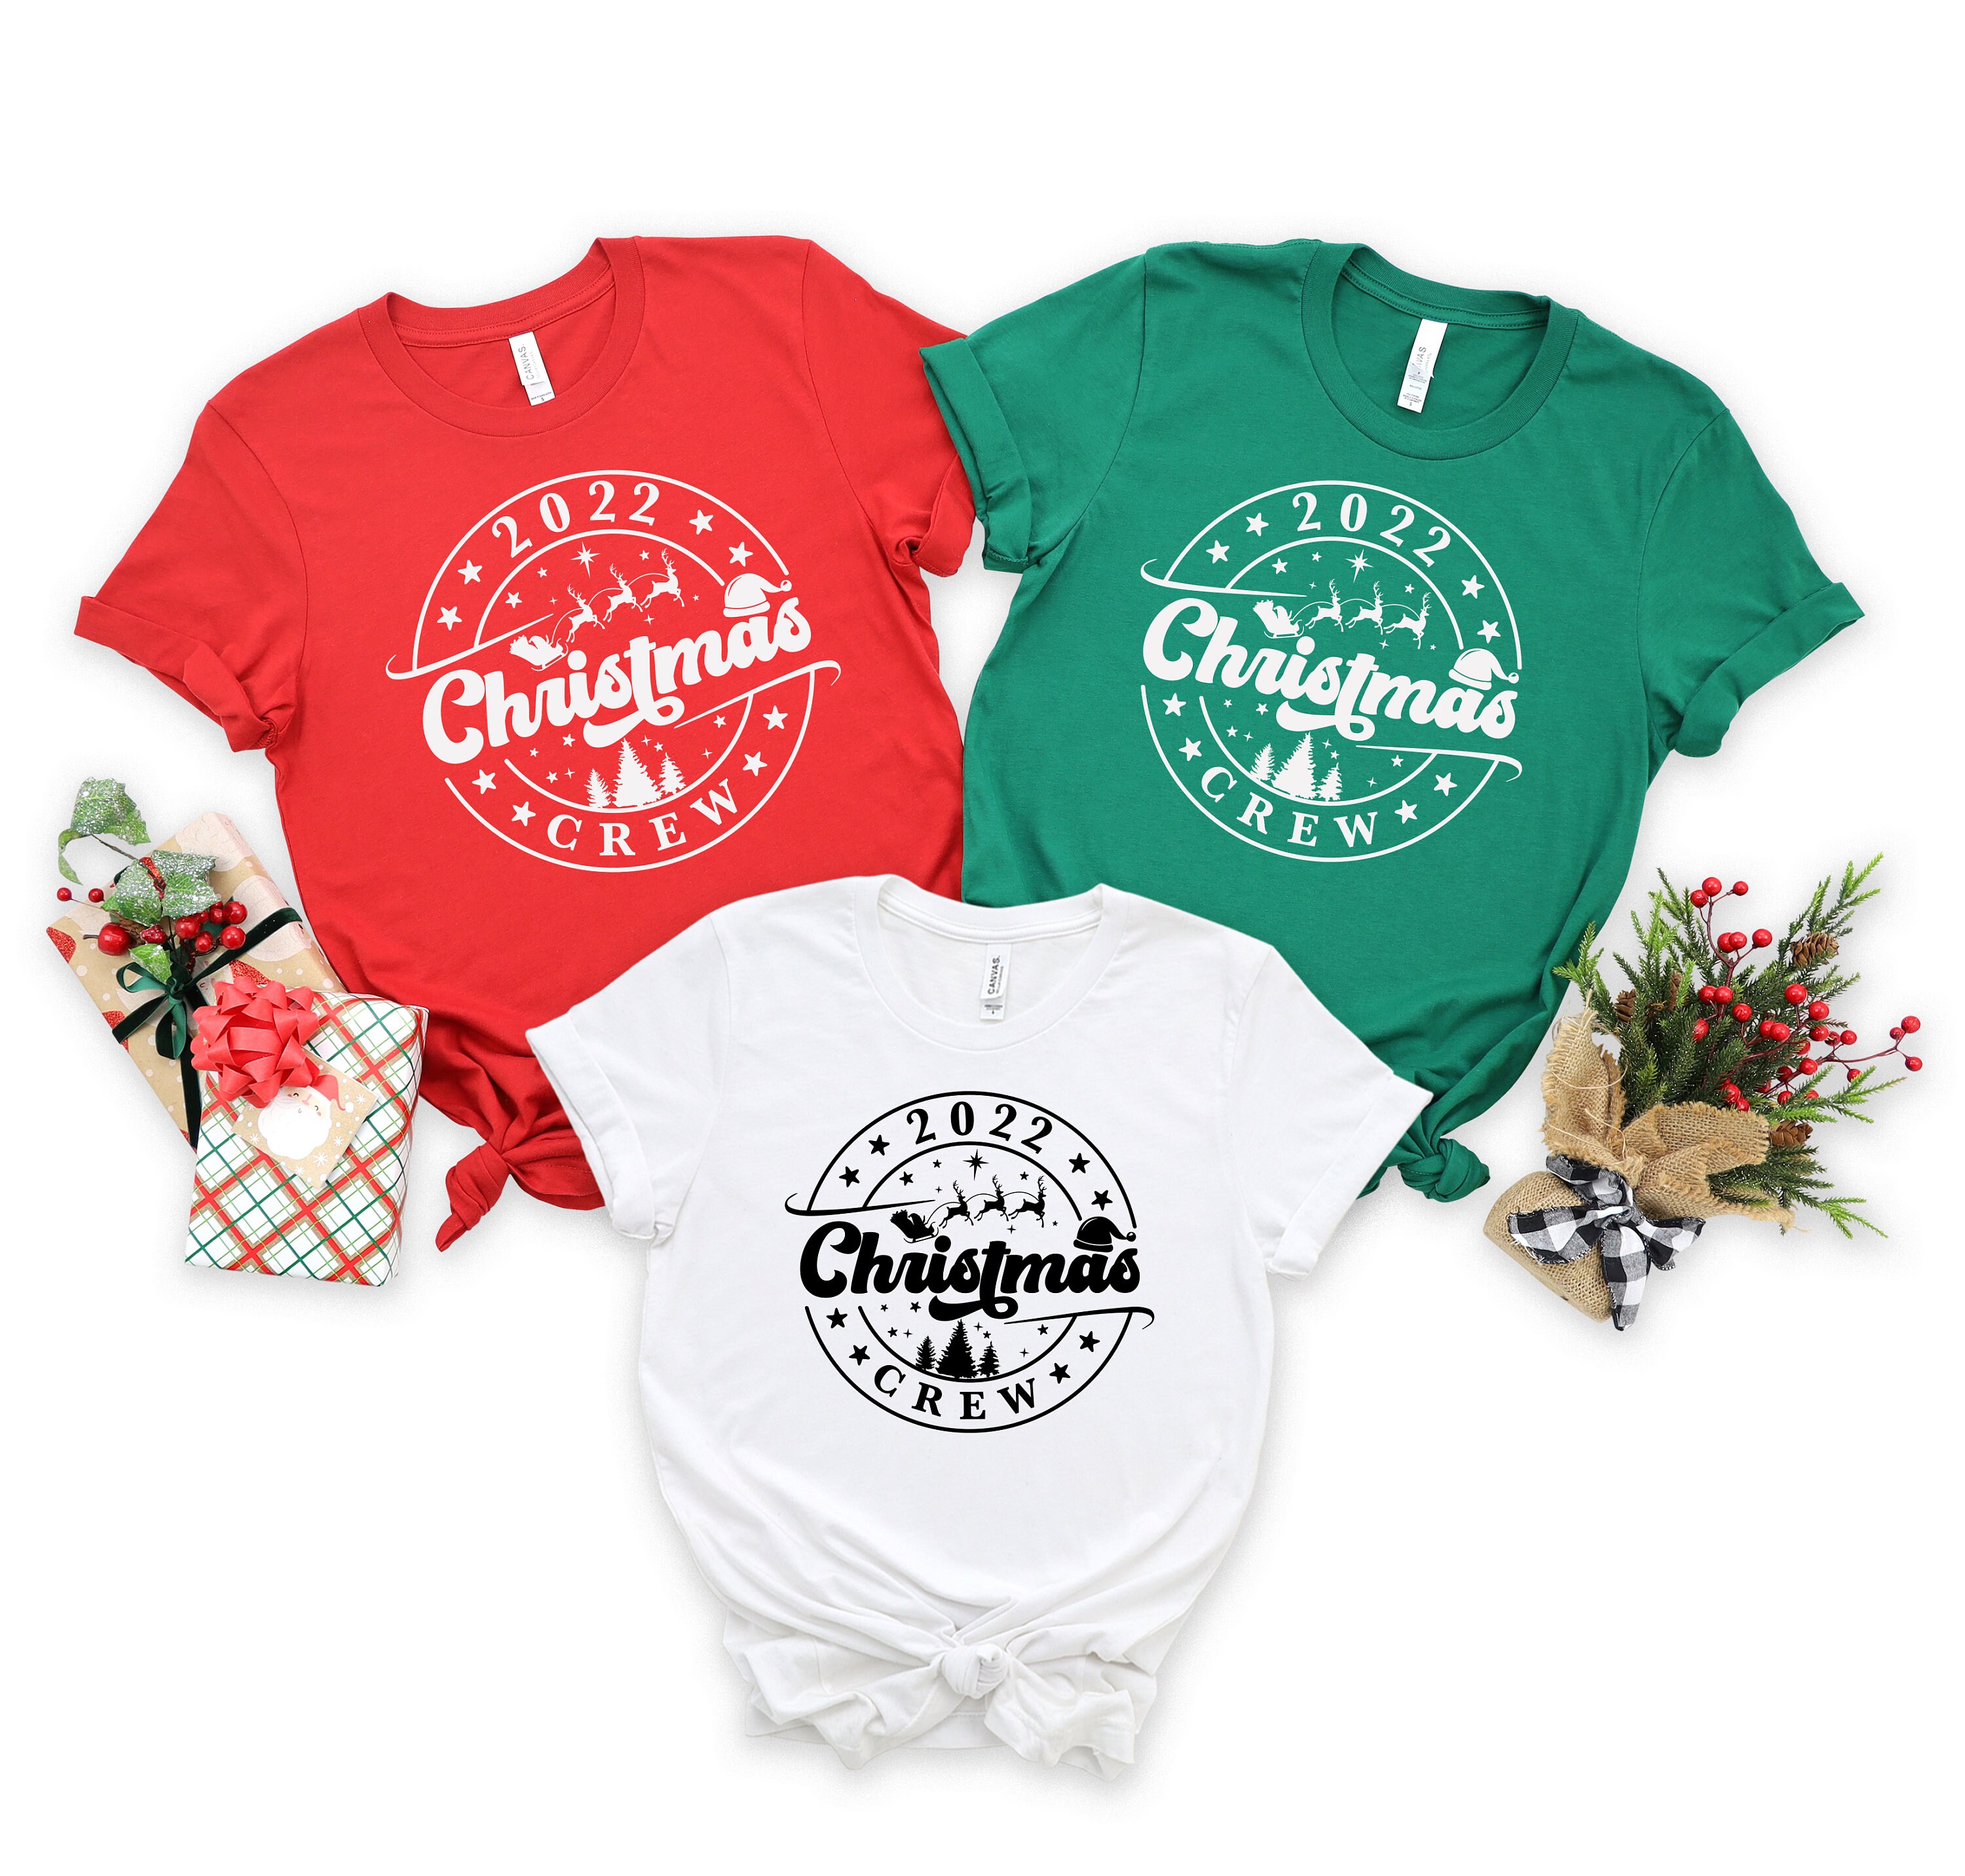 Kleding Meisjeskleding Tops & T-shirts T-shirts Boy Christmas Shirt/Vintage Santa Claus Shirt/Christmas Outfit/Vintage Stitch/Personalized Shirt/Embroidered Shirt/1st Christmas/Applique 